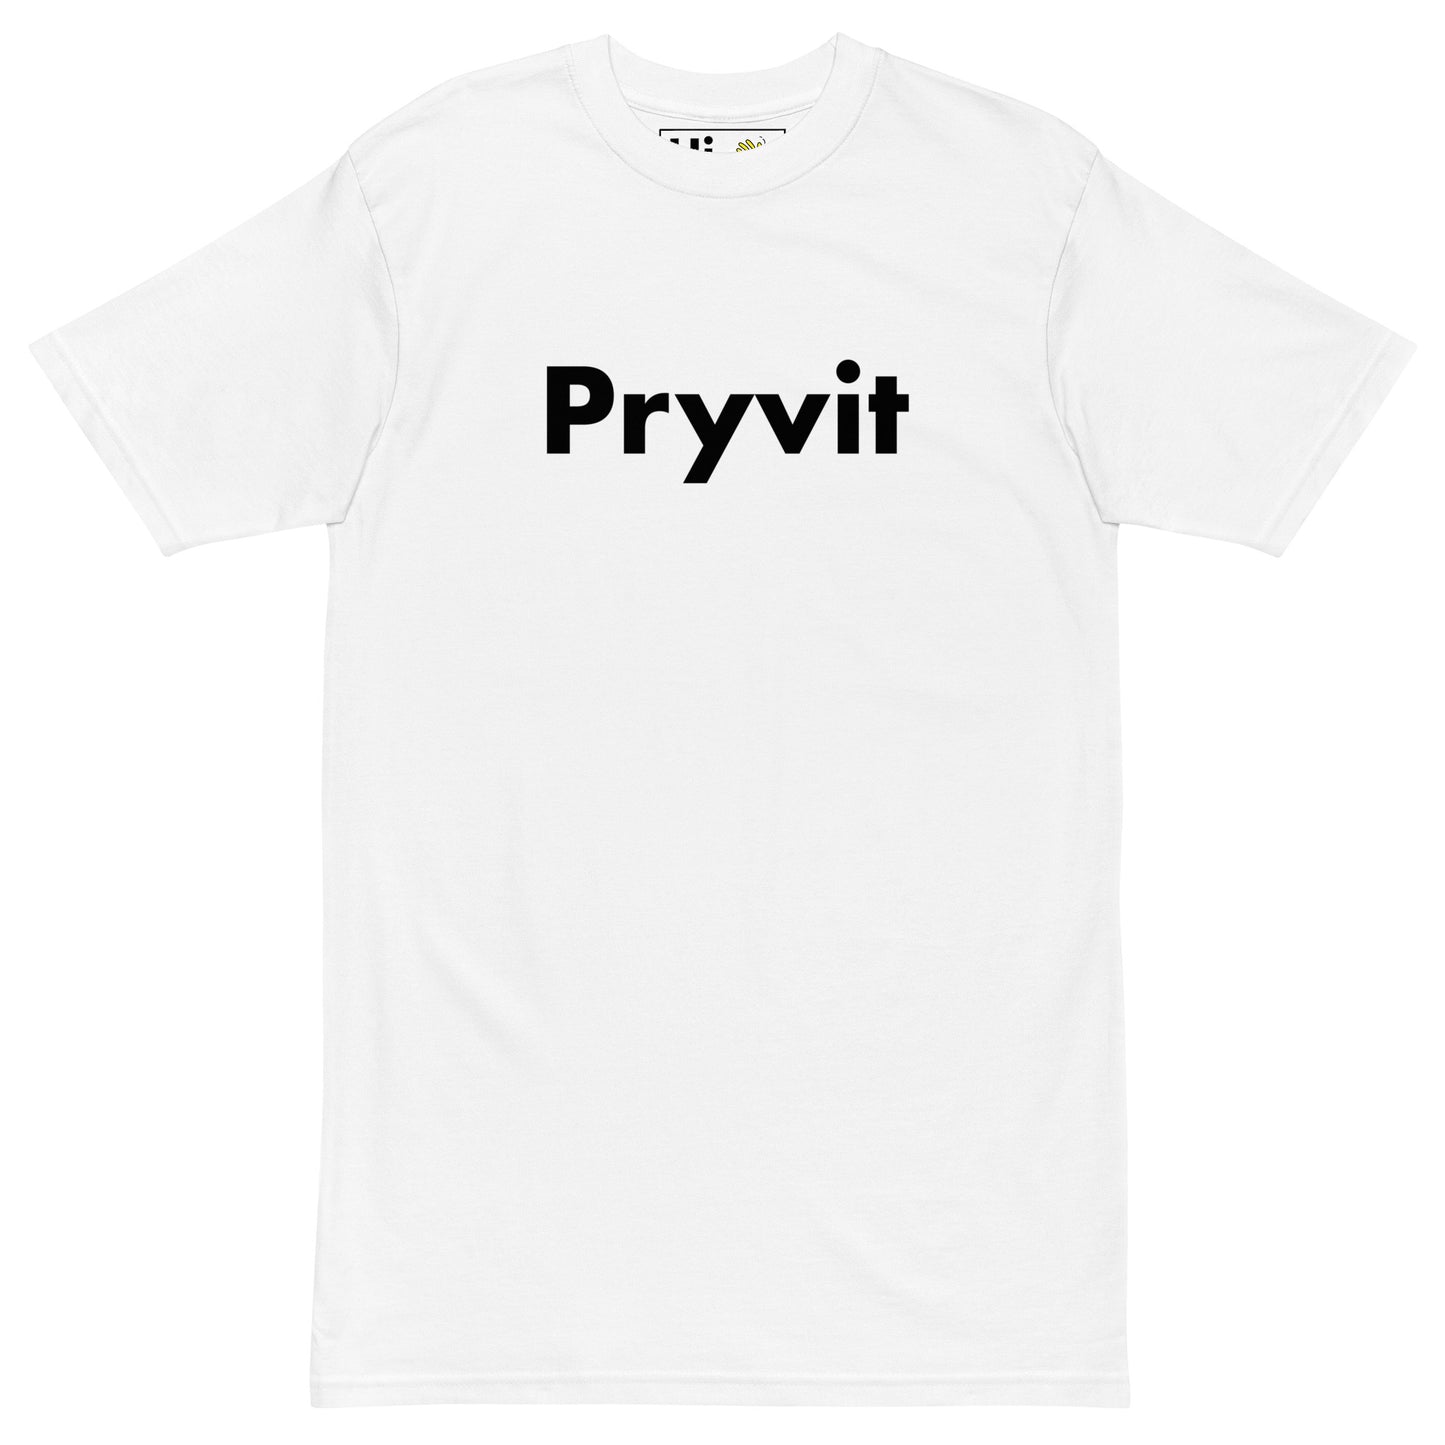 Hi Pryvit Ukrainian